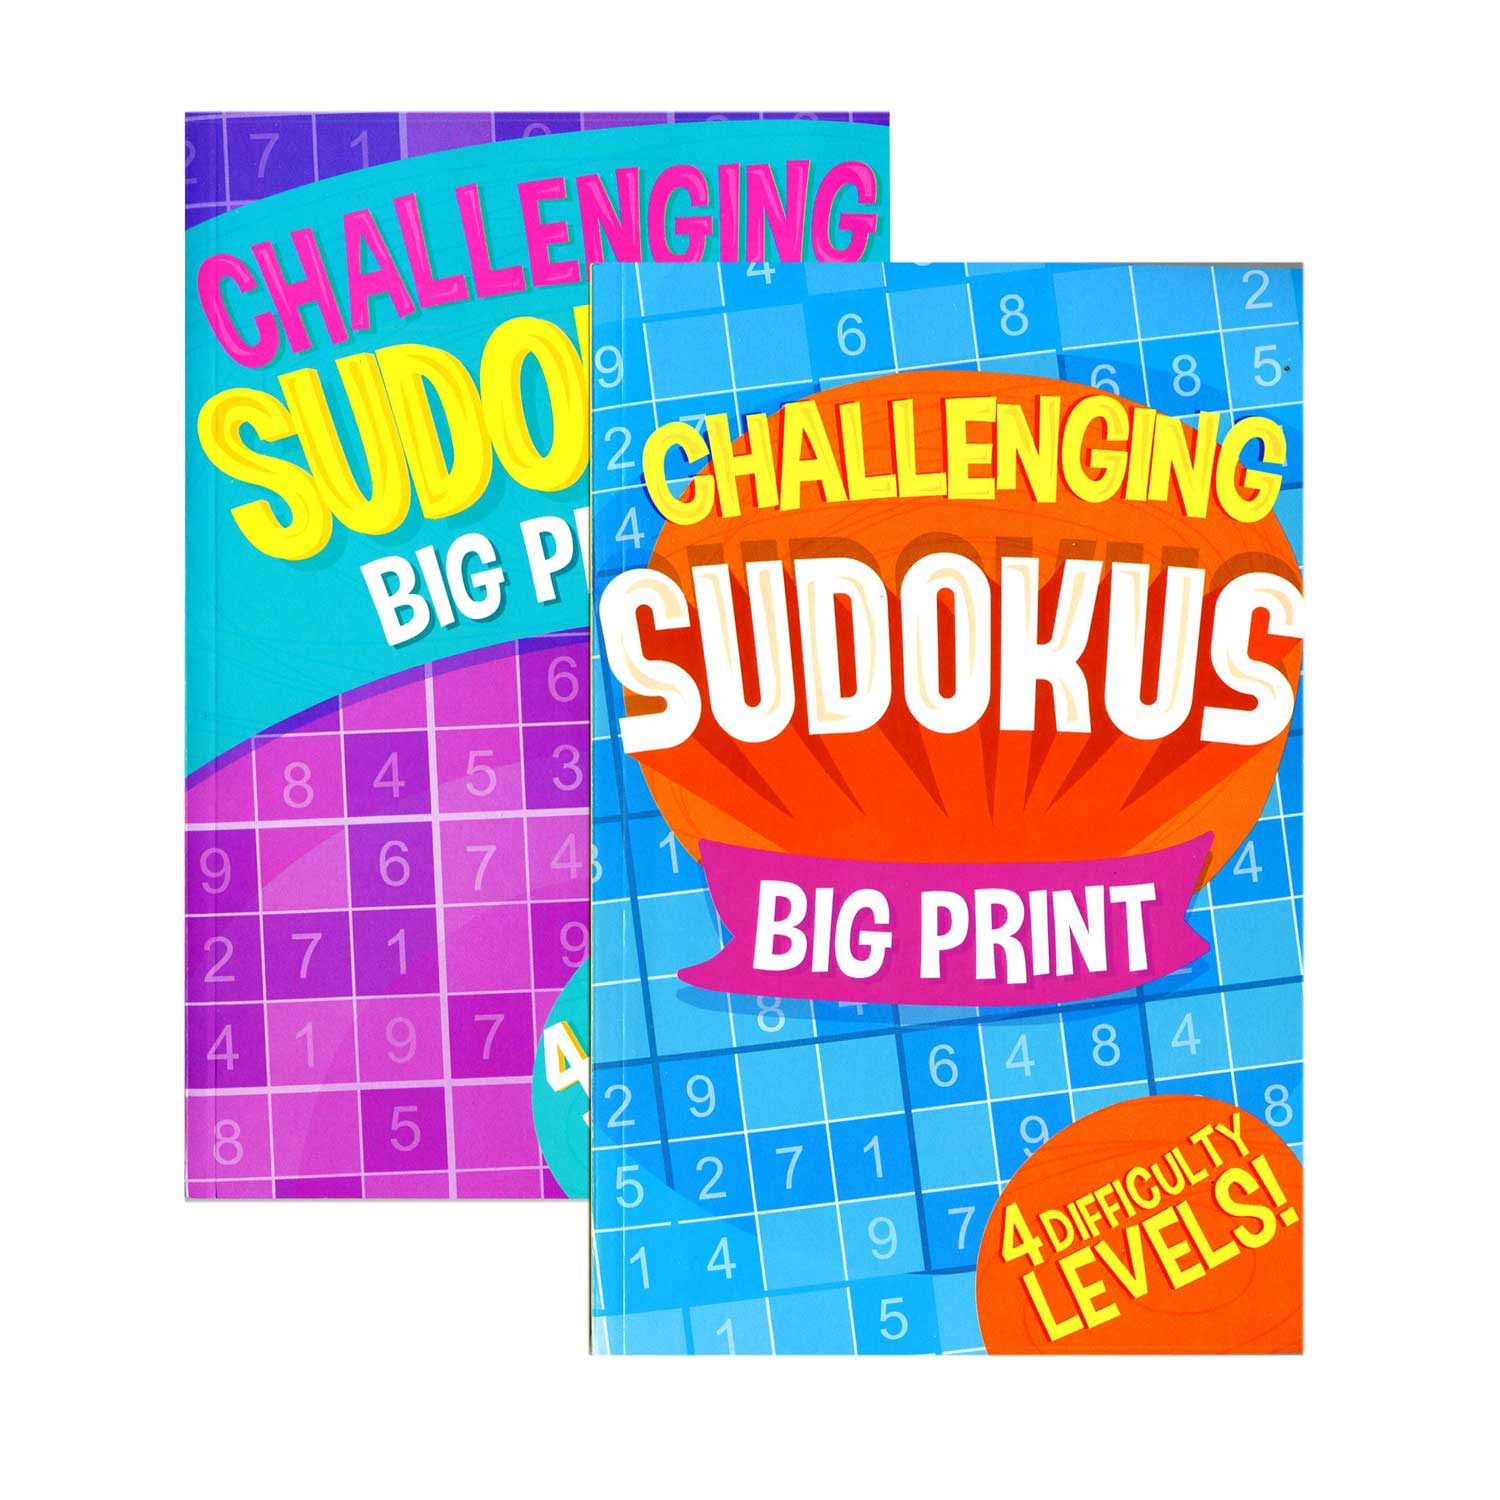 Puzzle Book| Vision ST Challenging SUDOKUS Big Print Sudoku Puzzle Books | DIGEST Size